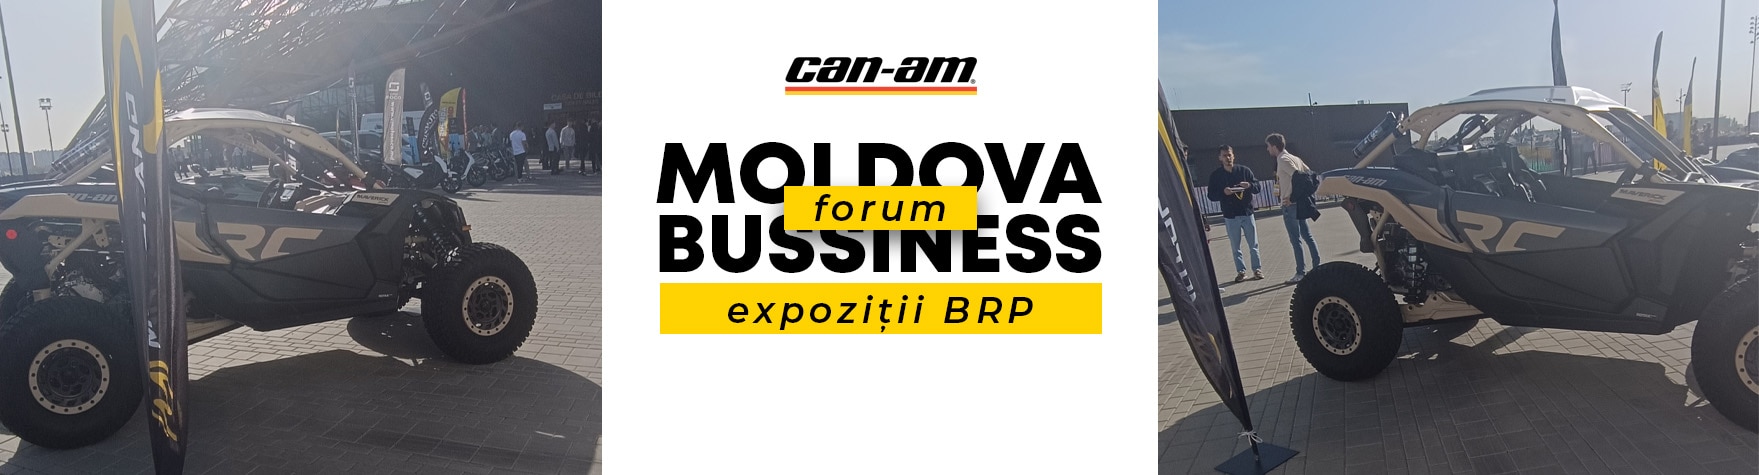 moldova-business-forum-expozitii-brp